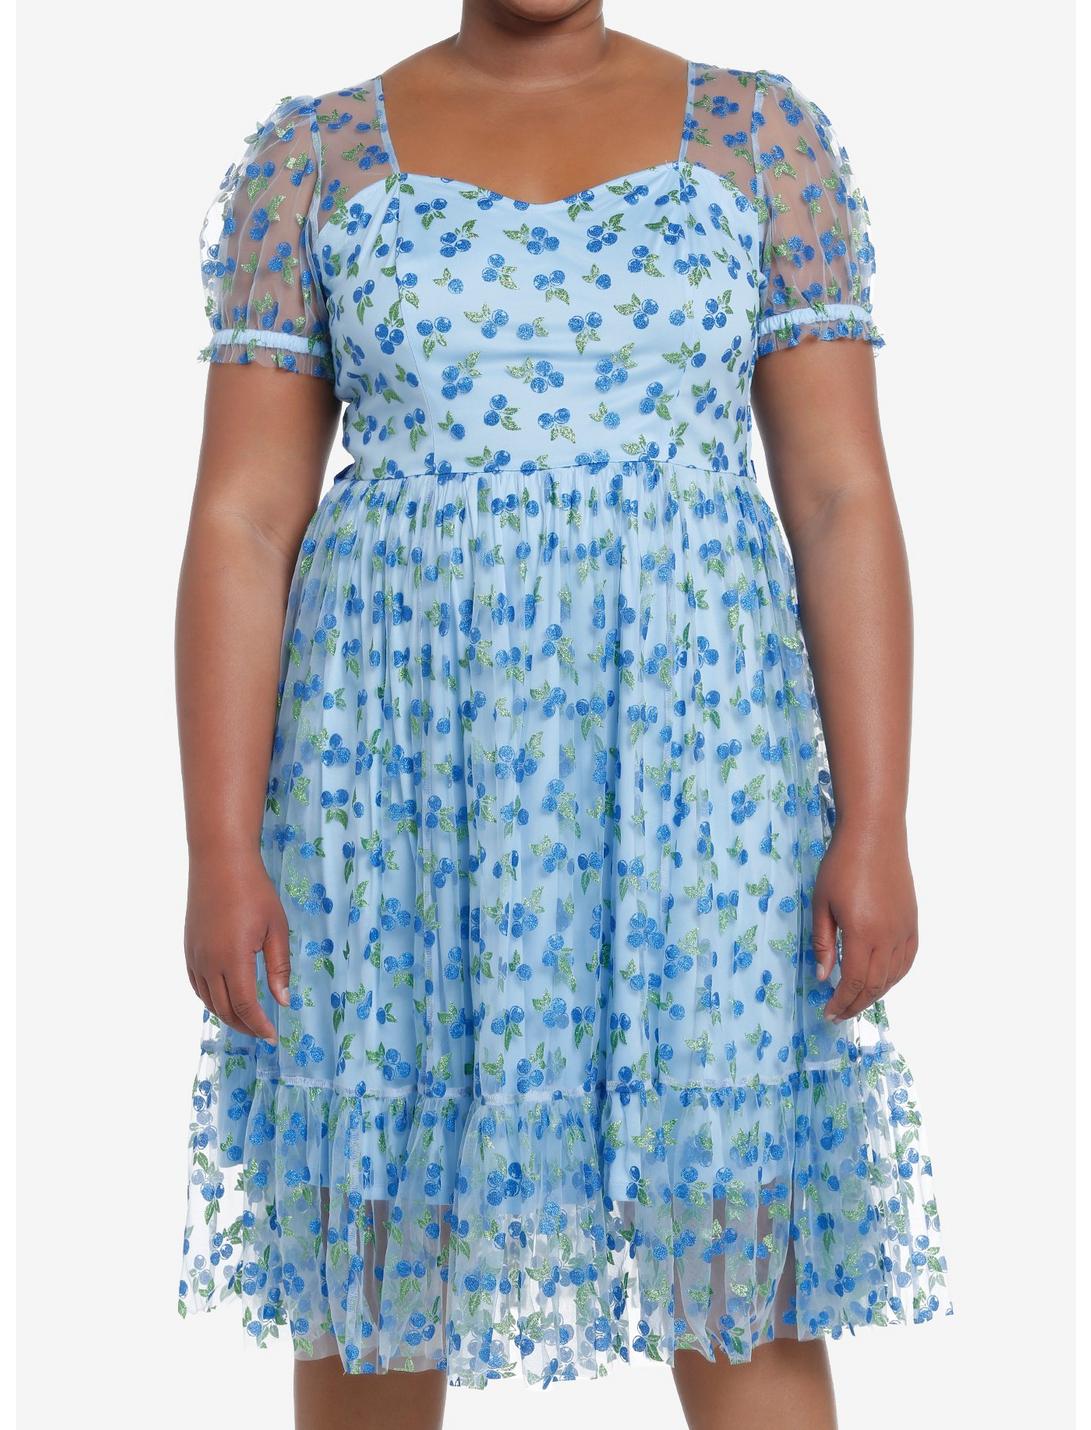 Sweet Society Blueberry Glitter Mesh Dress Plus Size, BLUE, hi-res